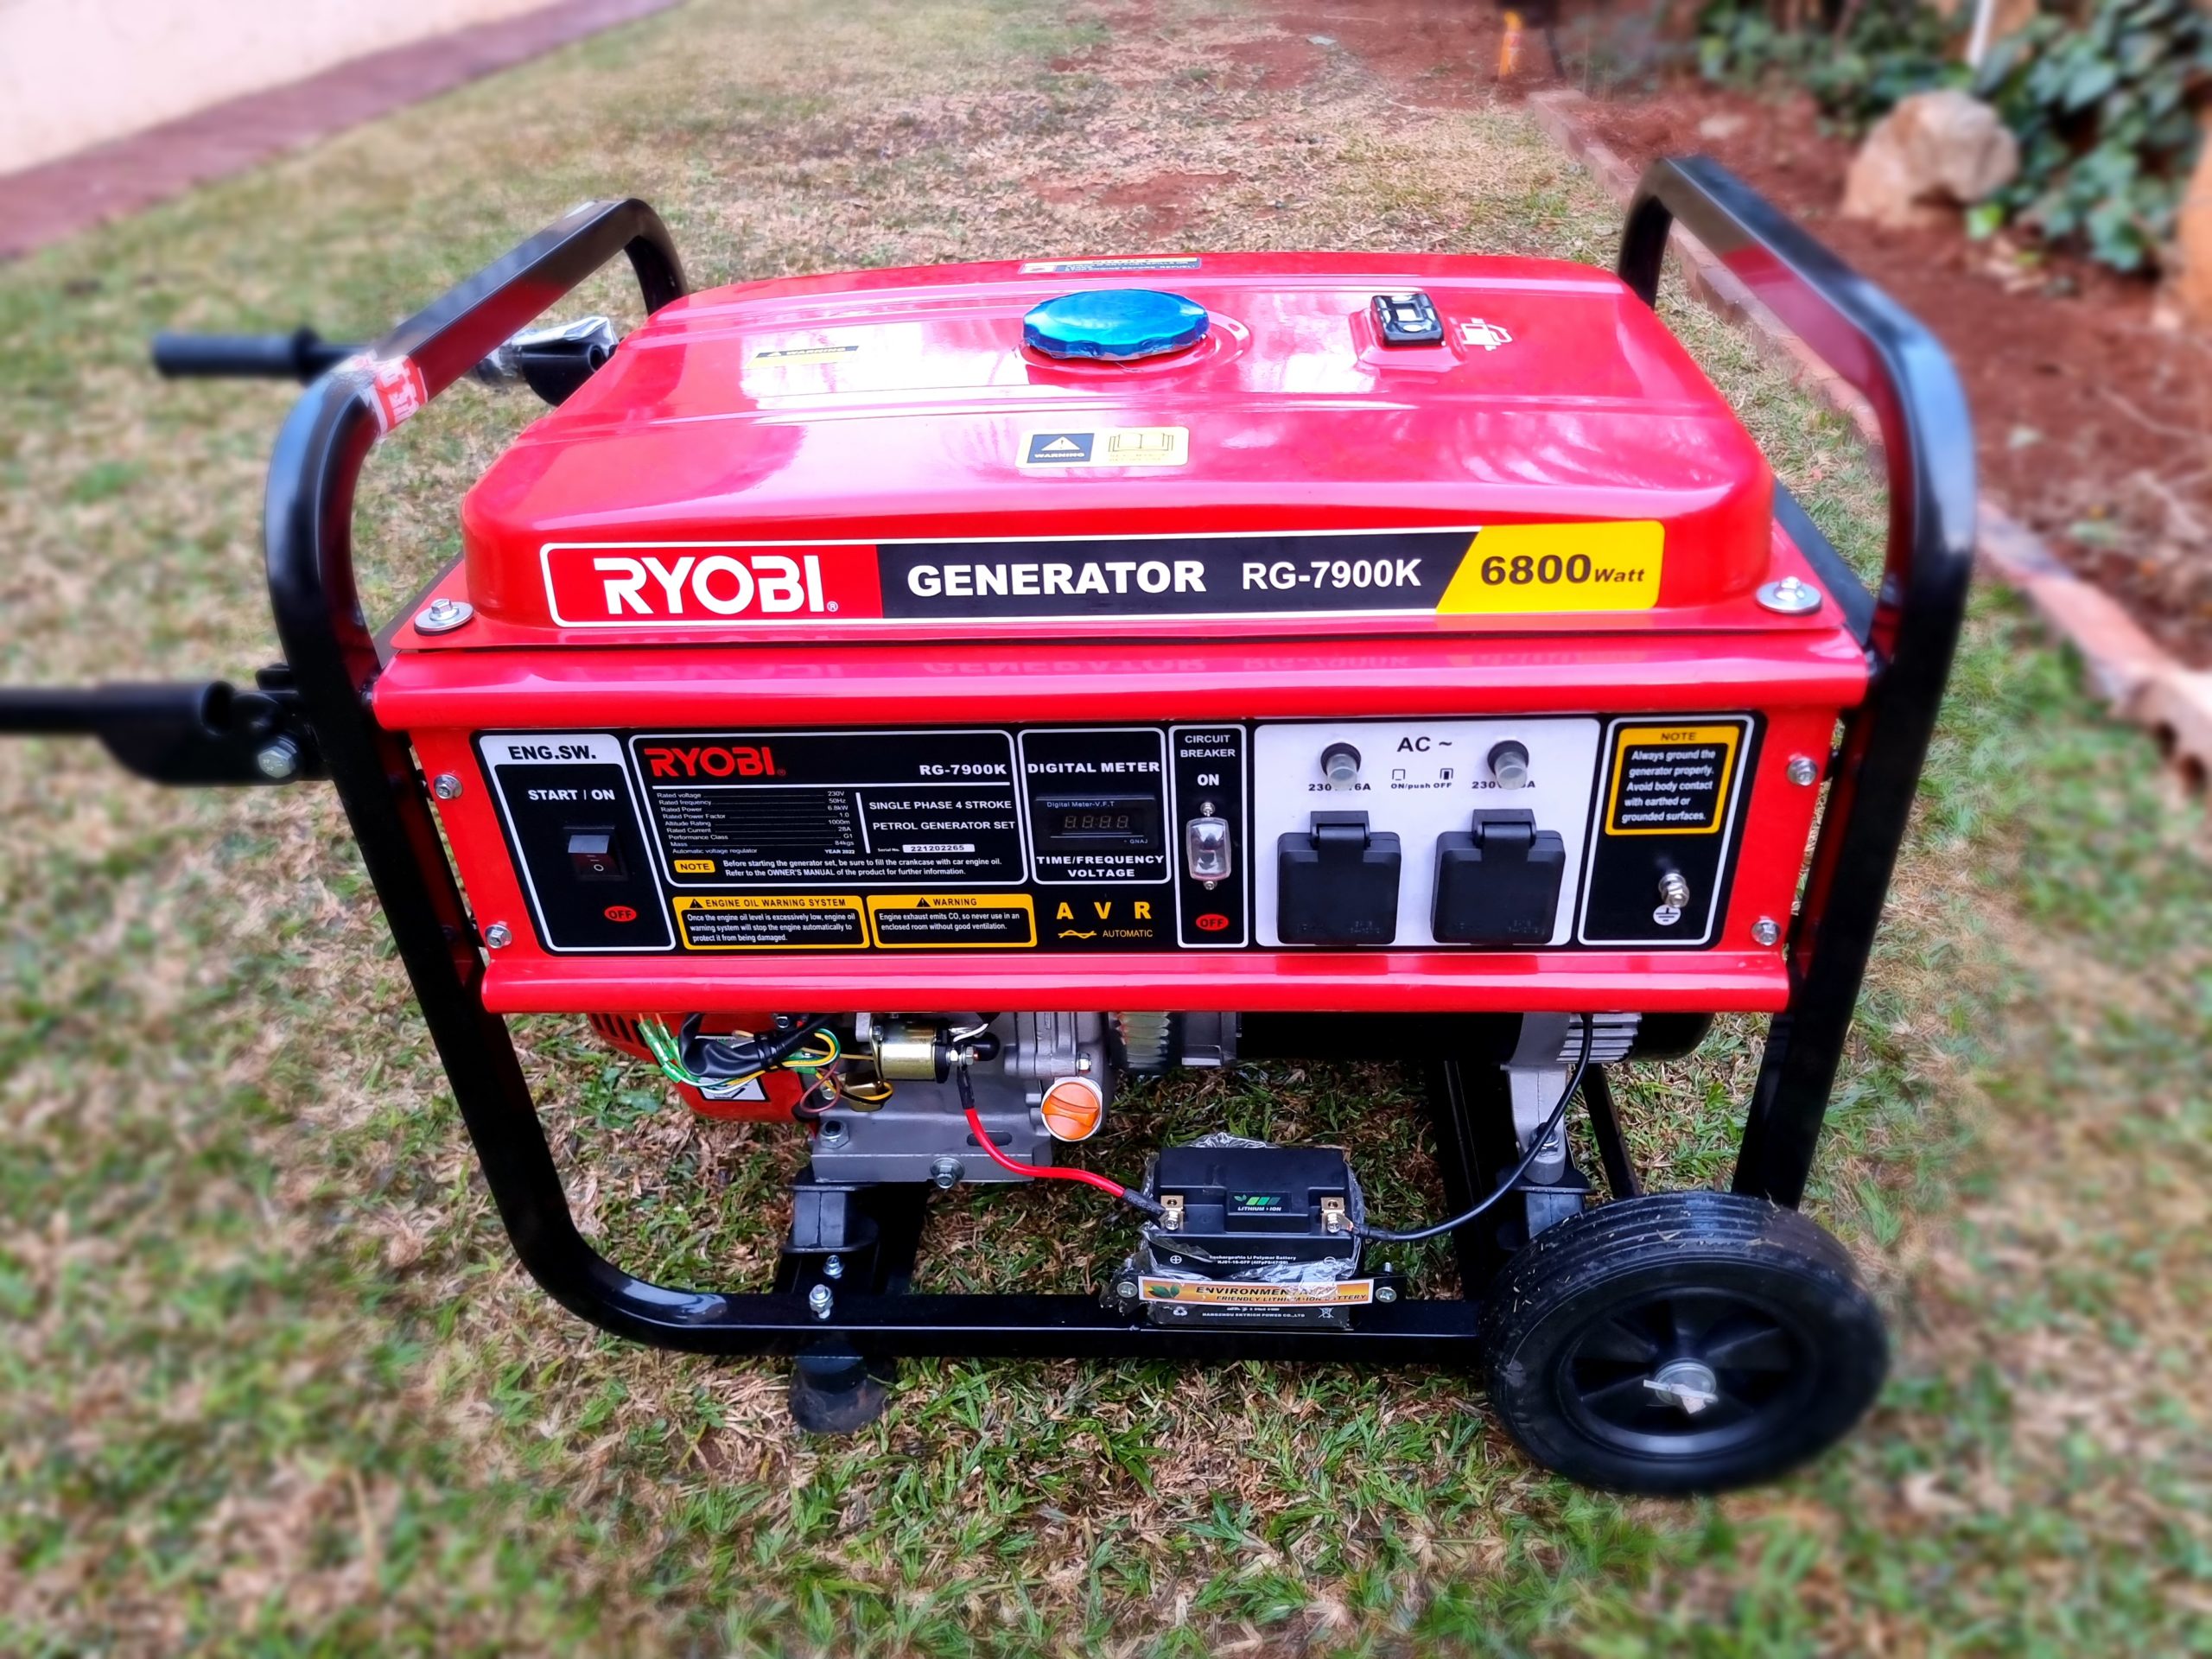 Ryobi 7kVA 4-Stroke Petrol Generator – Perfect working condition